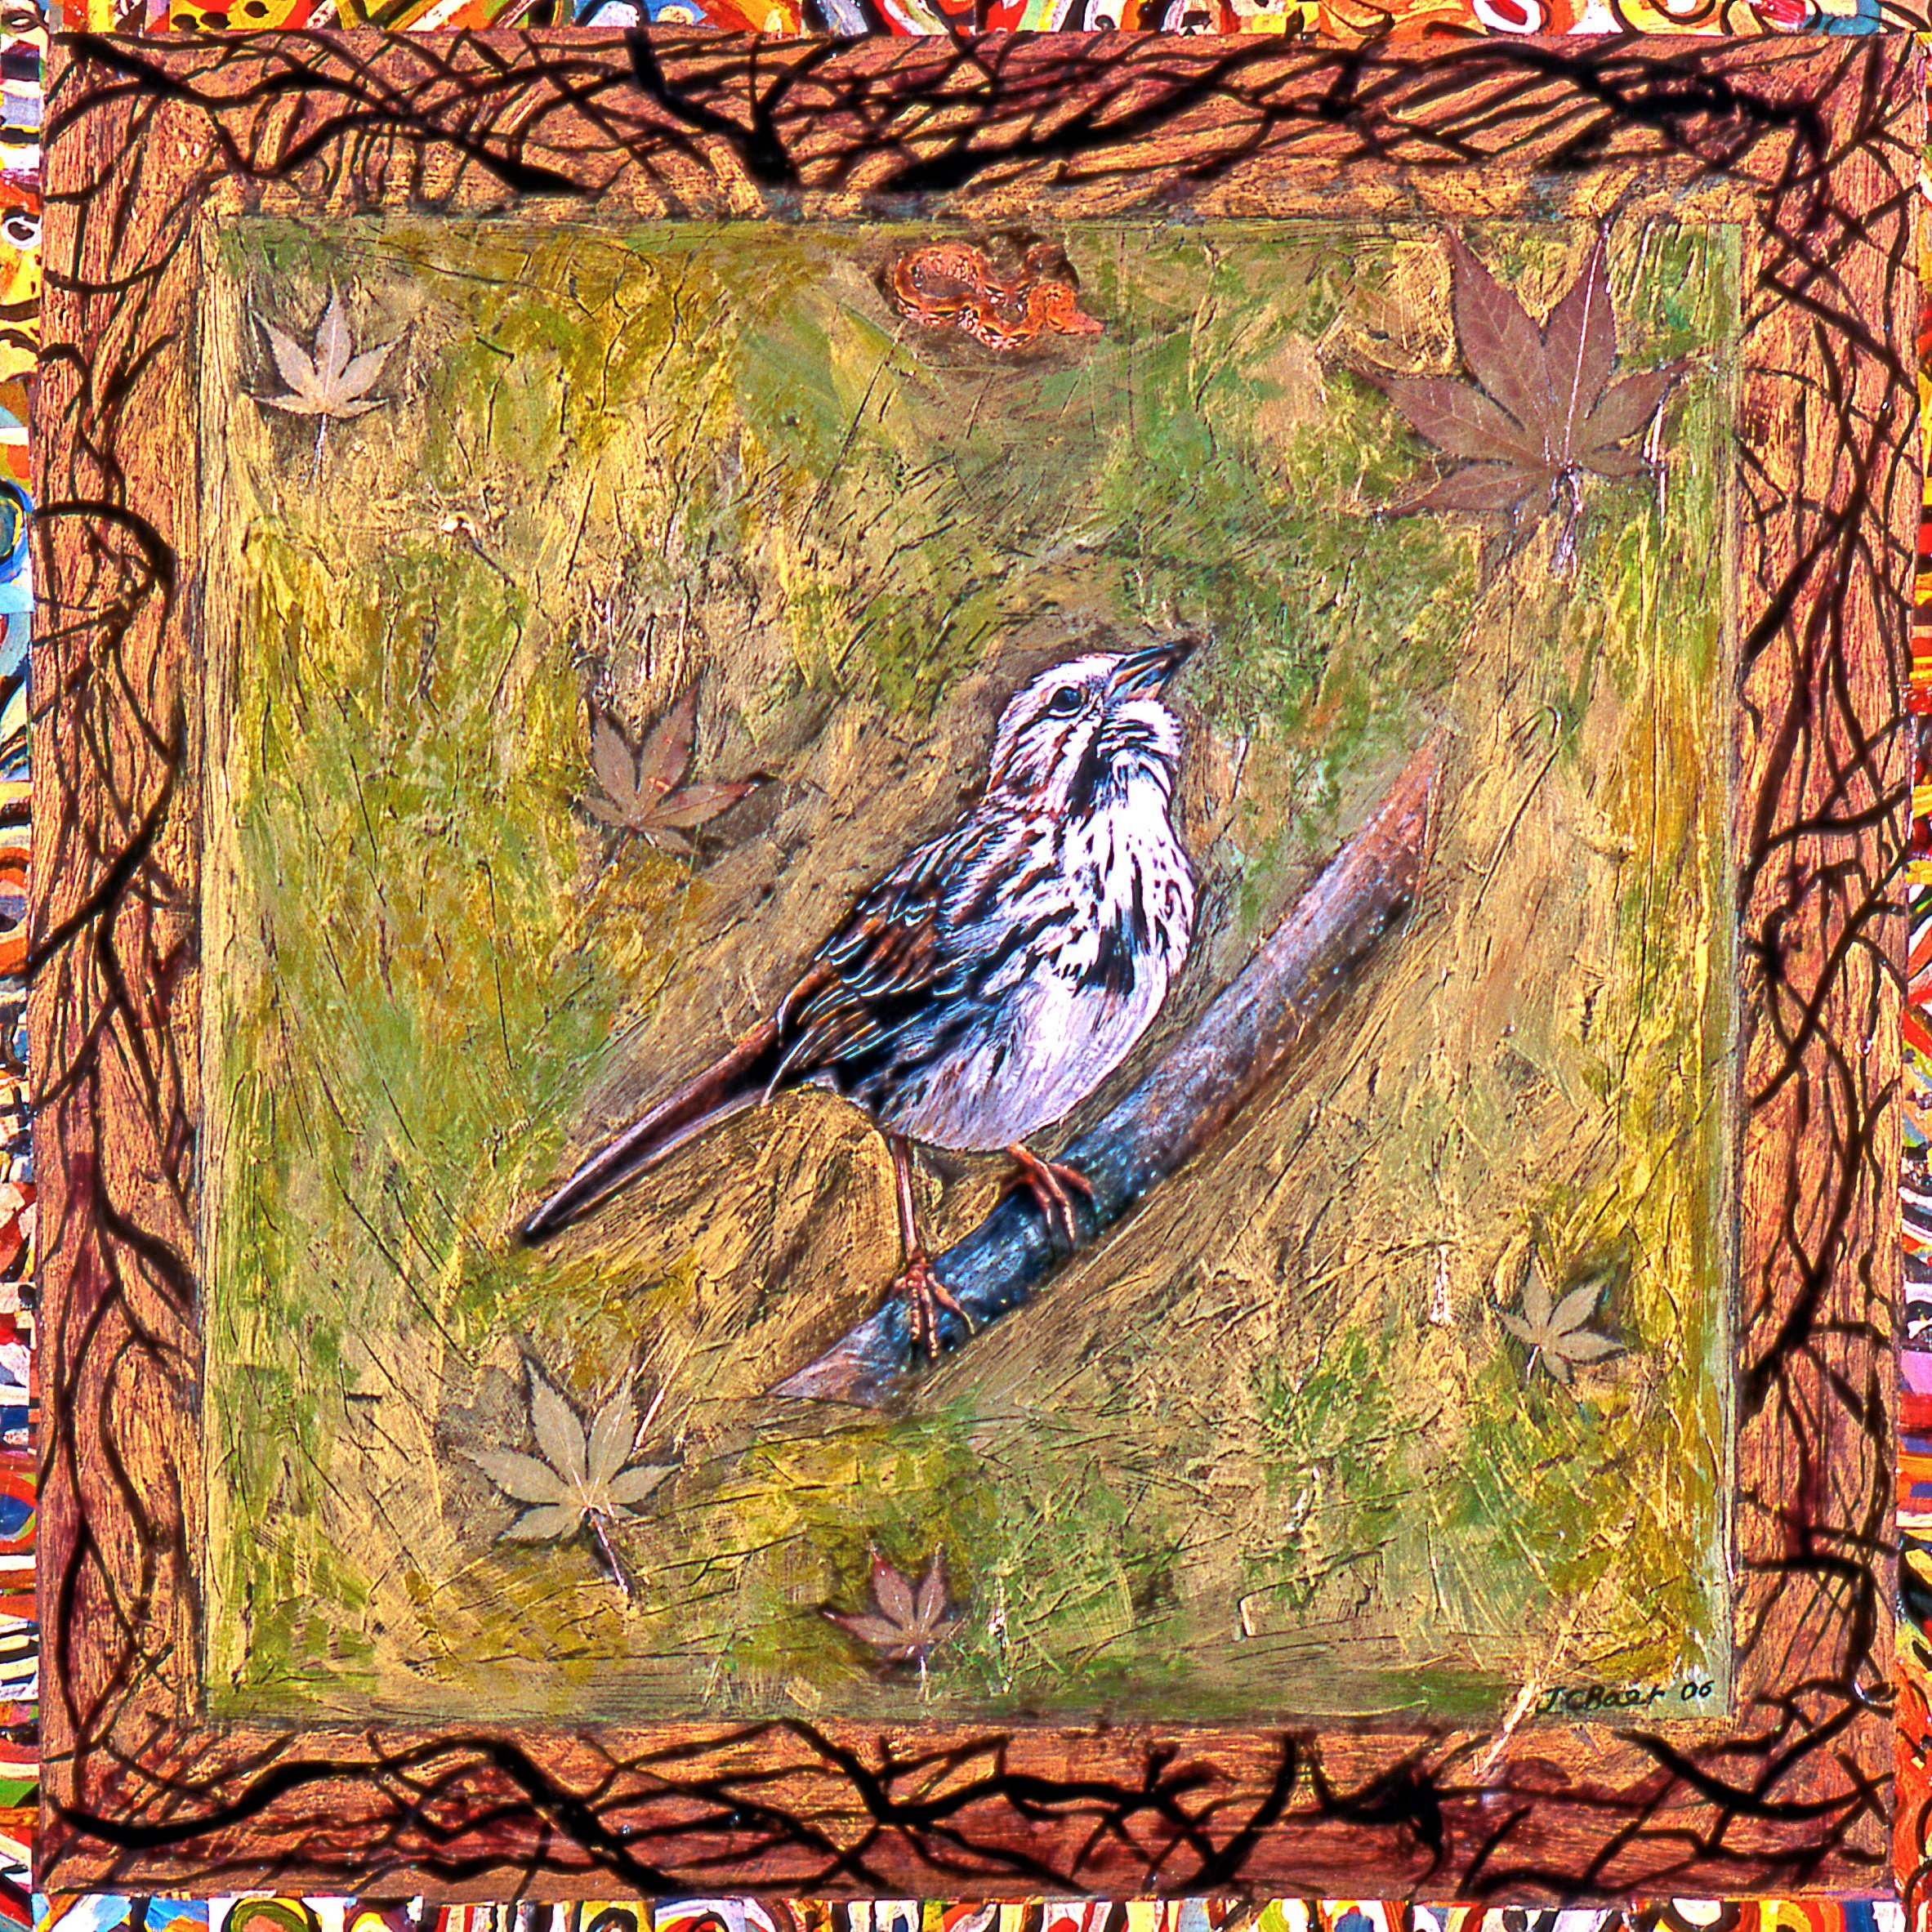 Song Sparrow, 2006, 24” x 24”, mixed media gouache and acrylic on wood panel, $2500